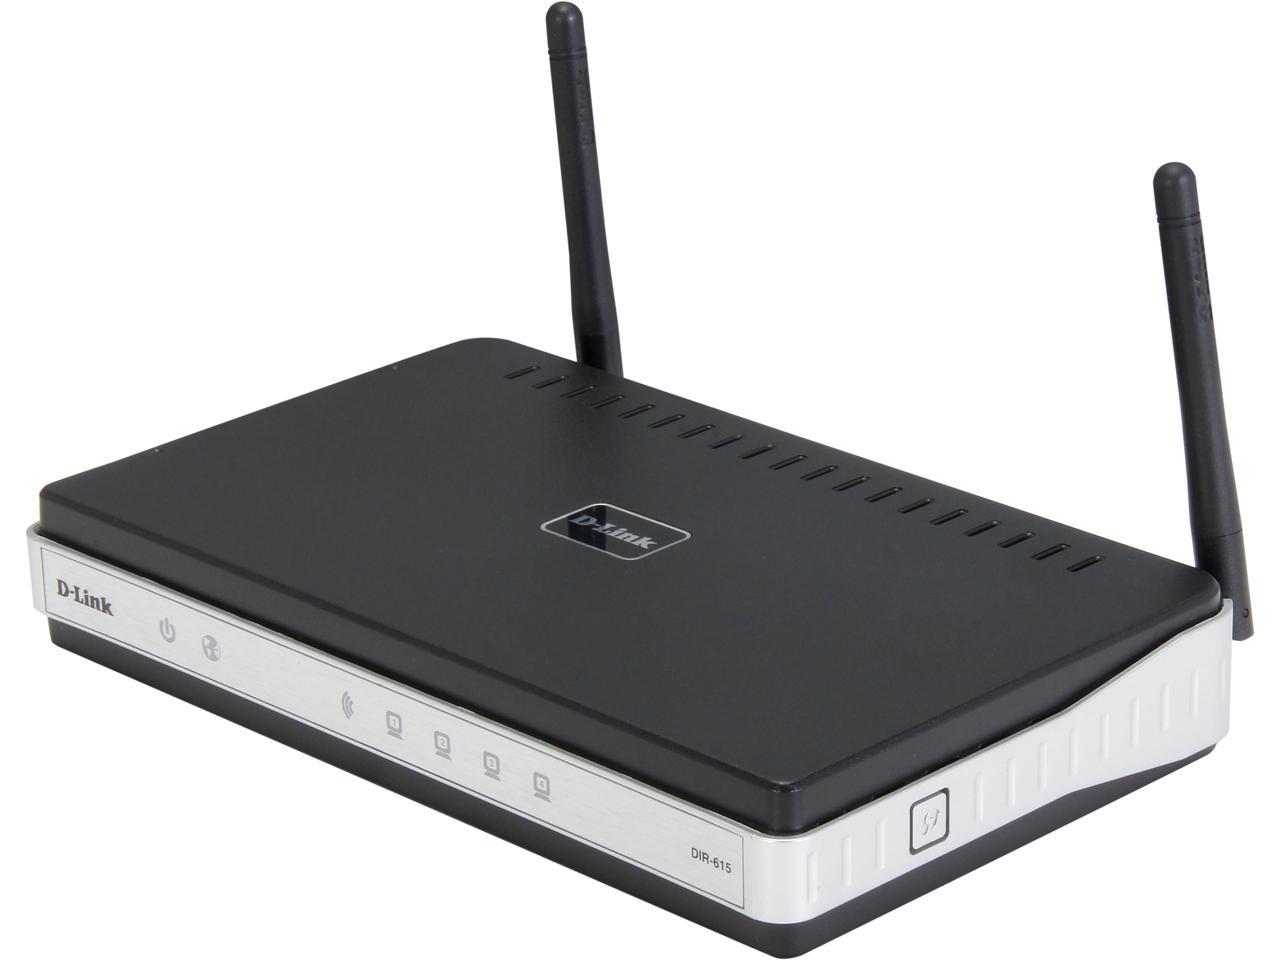 D-Link DIR-615 WirelessN N300 WIFI Router Access point broadband Internet Switch 